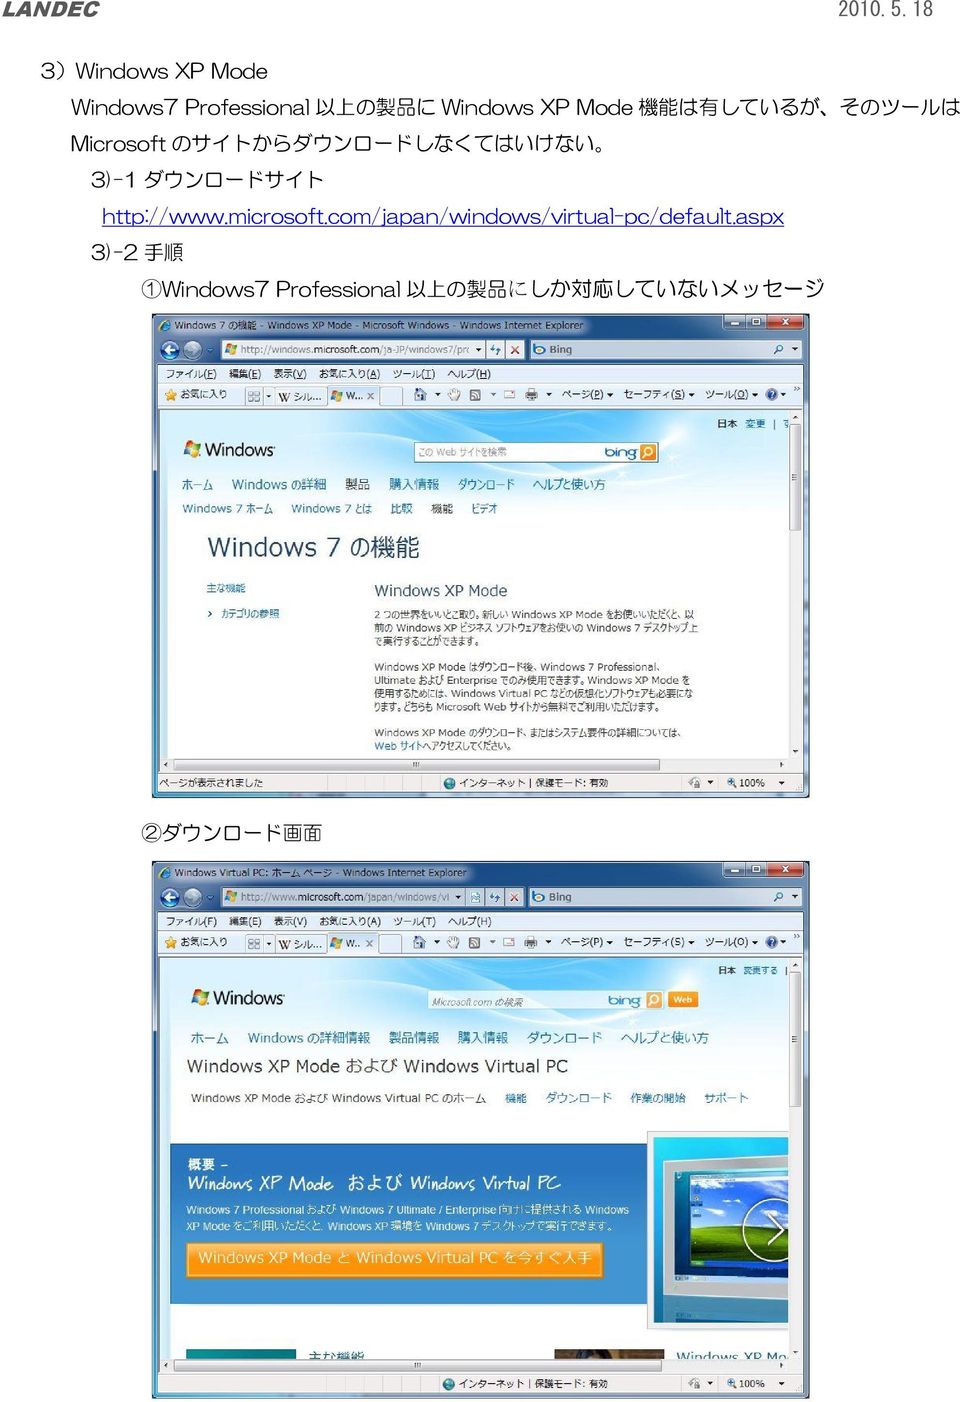 http://www.microsoft.com/japan/windows/virtual-pc/default.